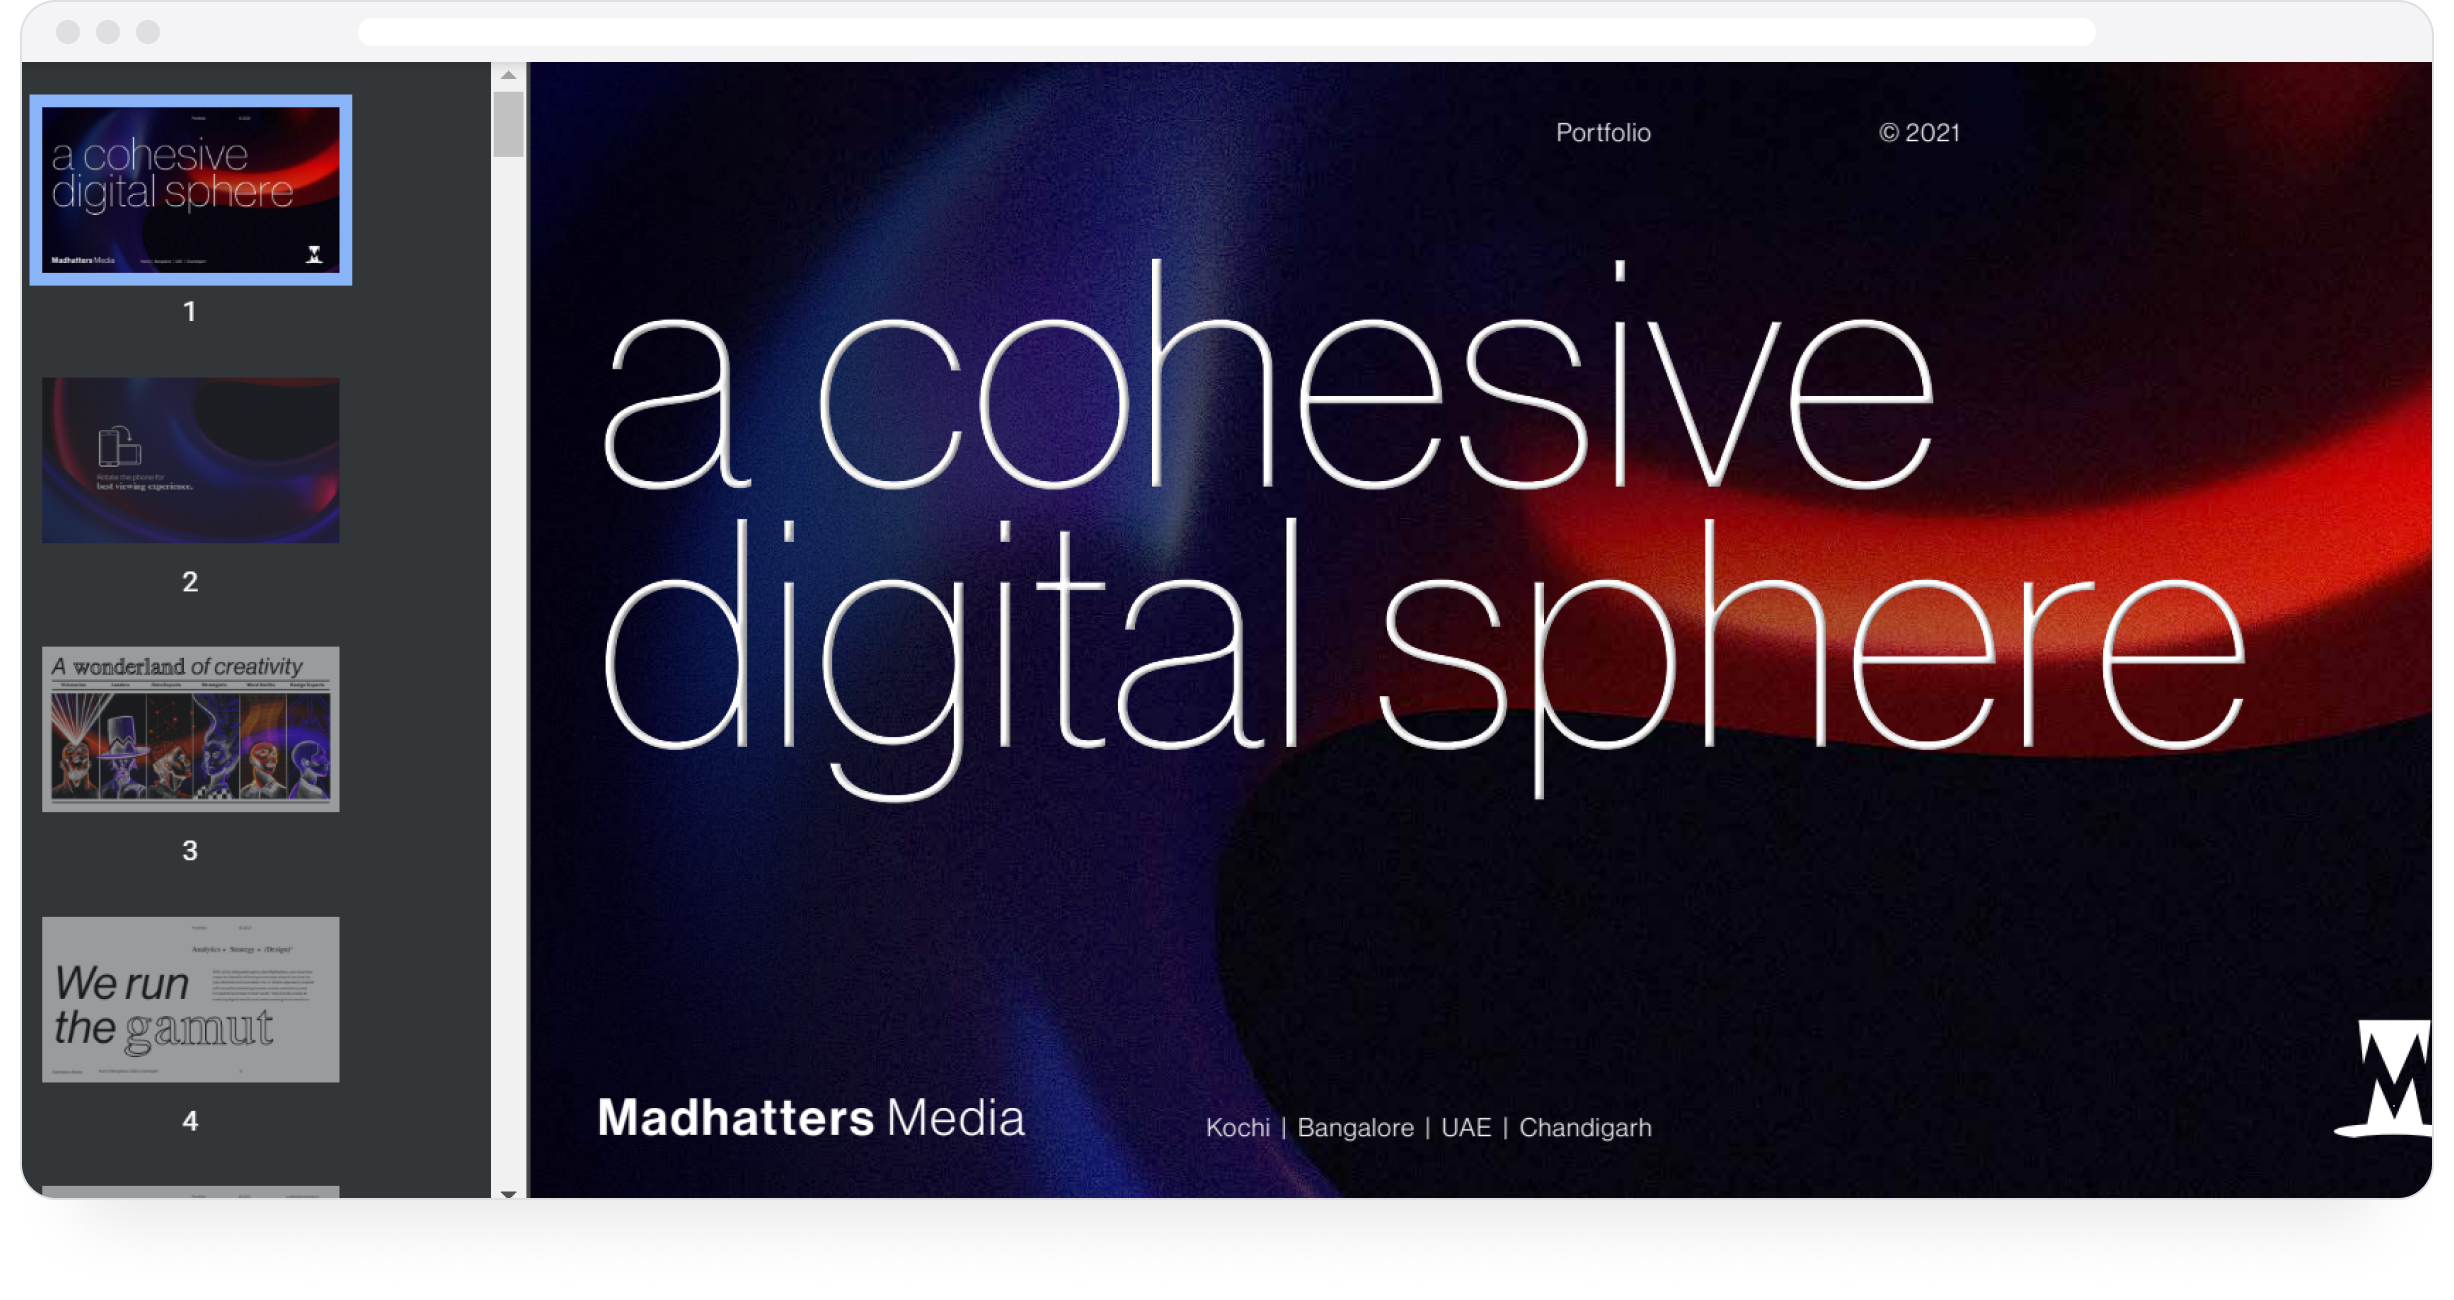 Madhatter Media's digital marketing and social media portfolio on PDF